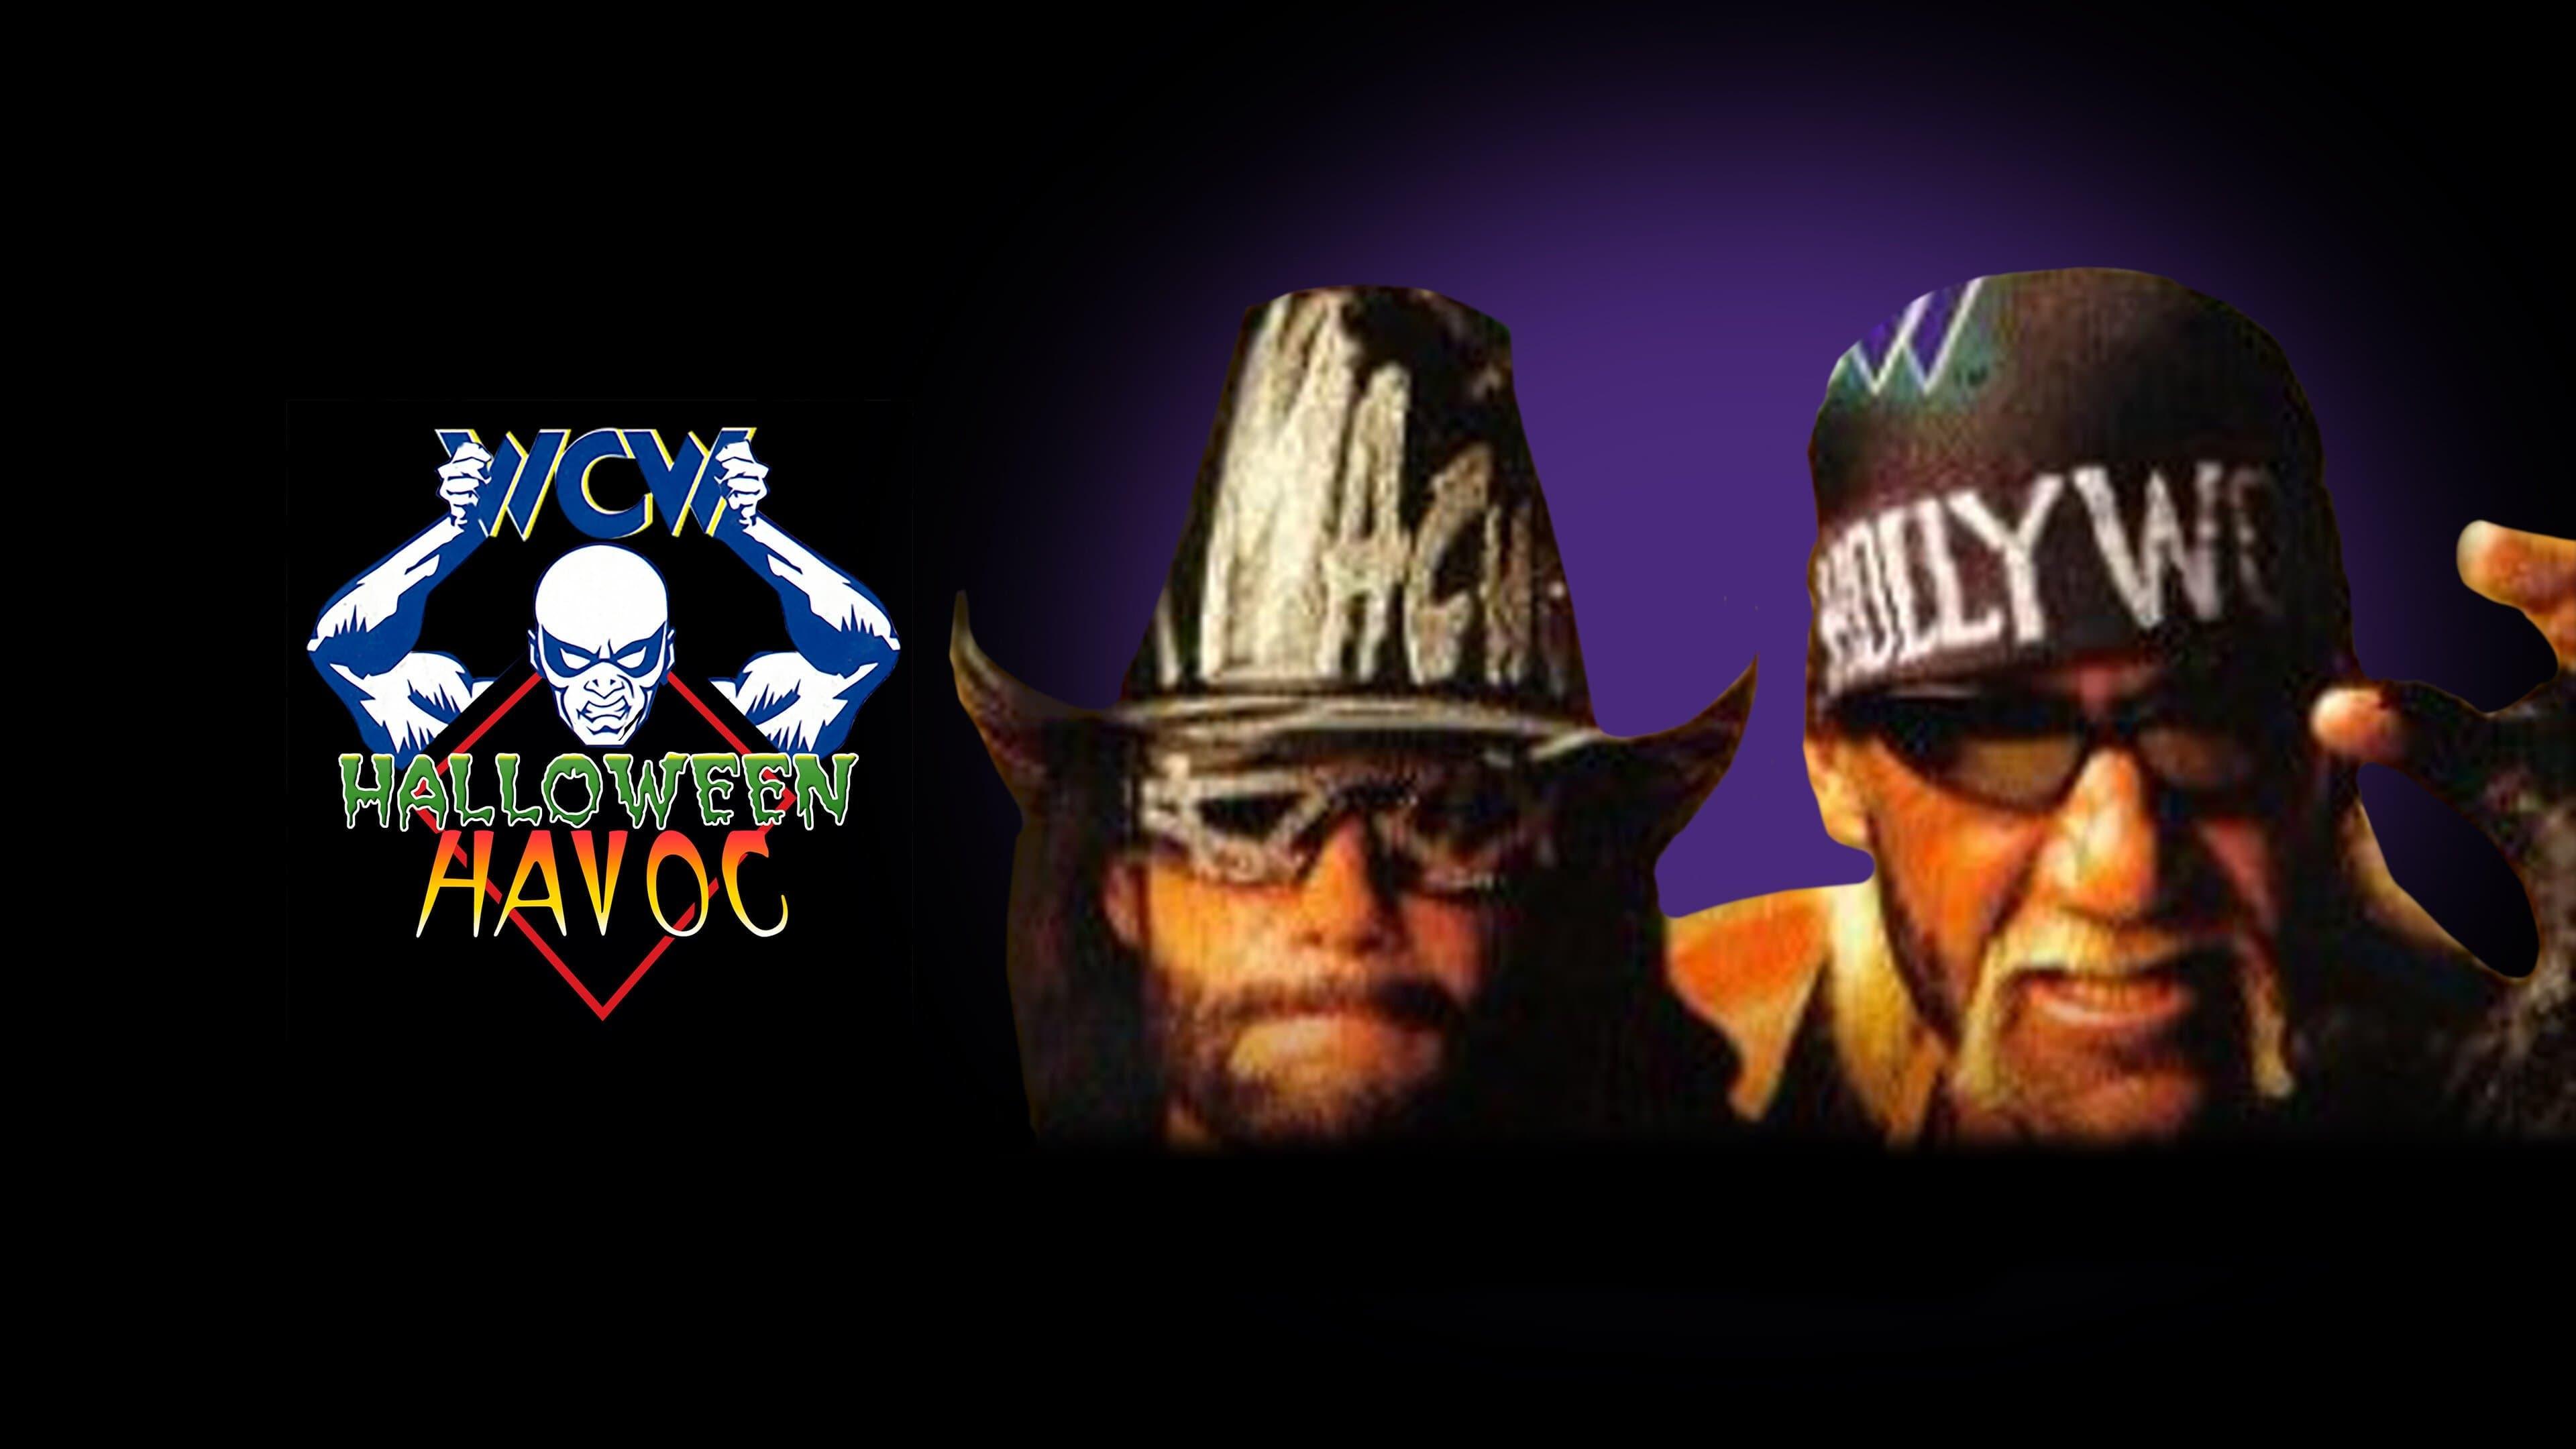 WCW Halloween Havoc 1996 backdrop